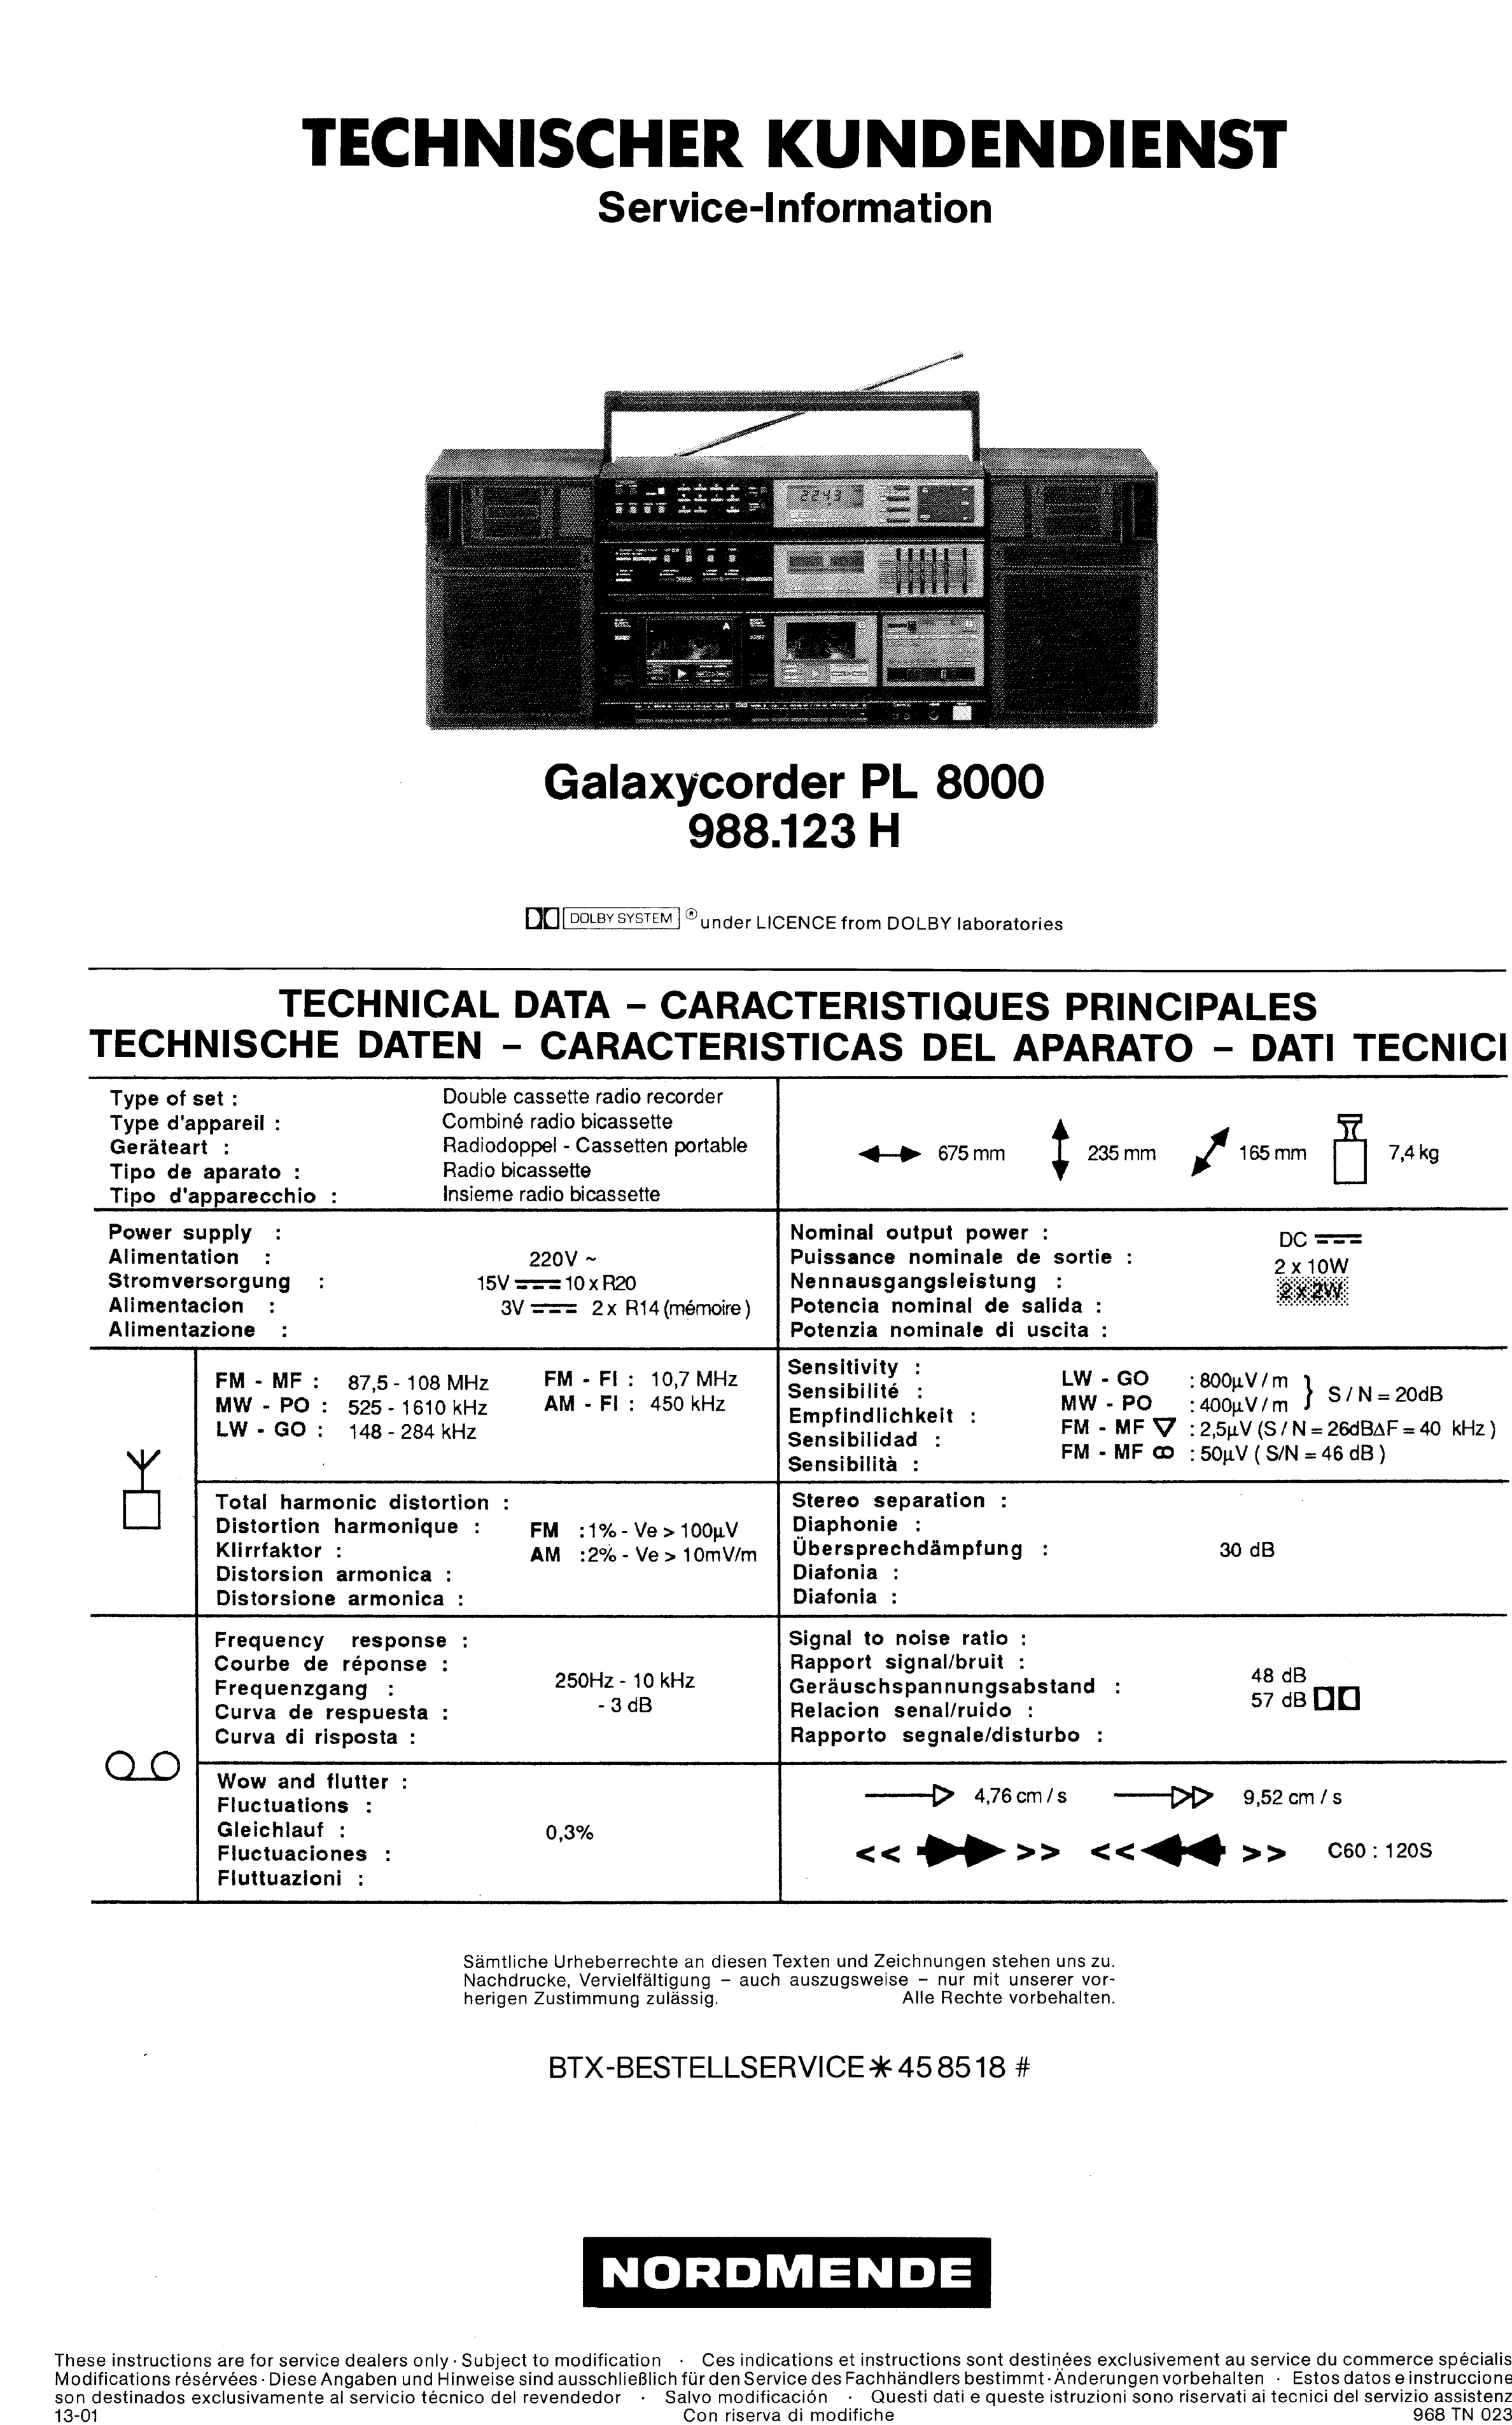 Nordmende Galaxycorder PL-8000-Daten-1989.jpg